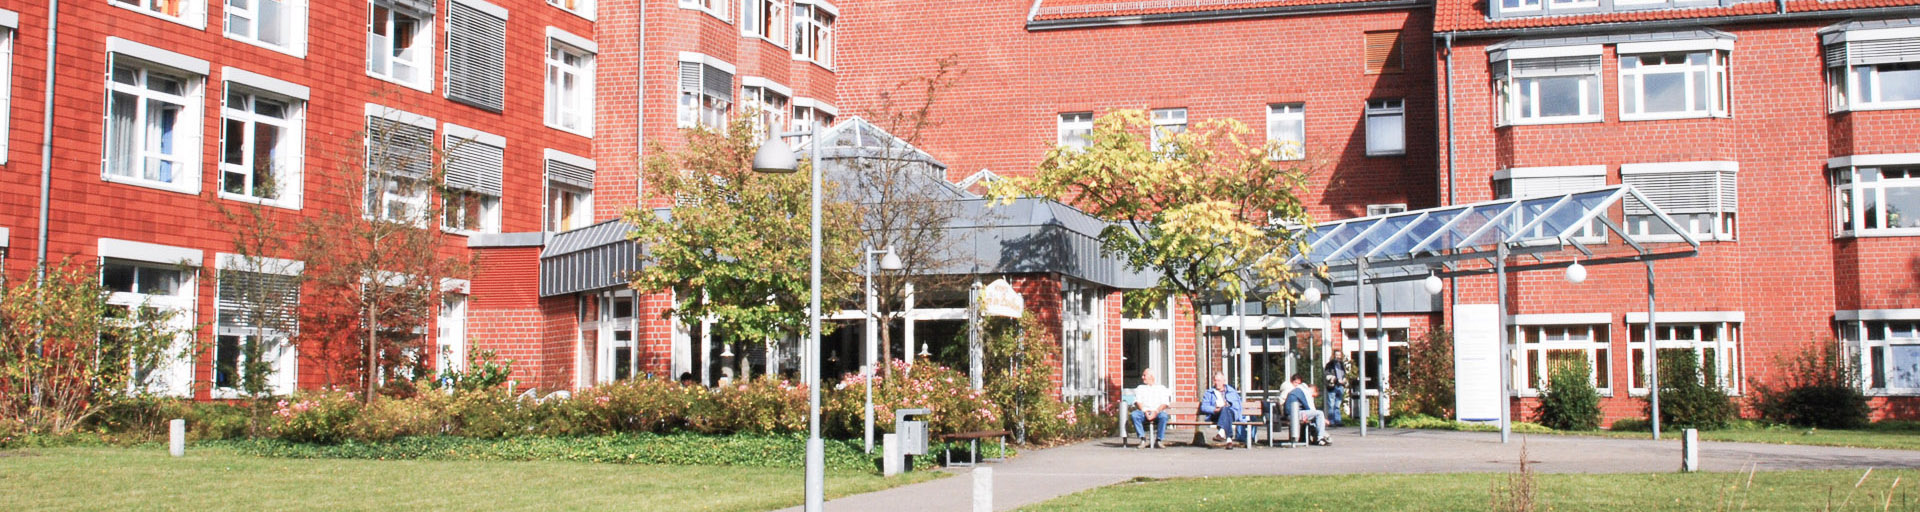 Haupteingang des Heidekreis-Klinikums in Soltau